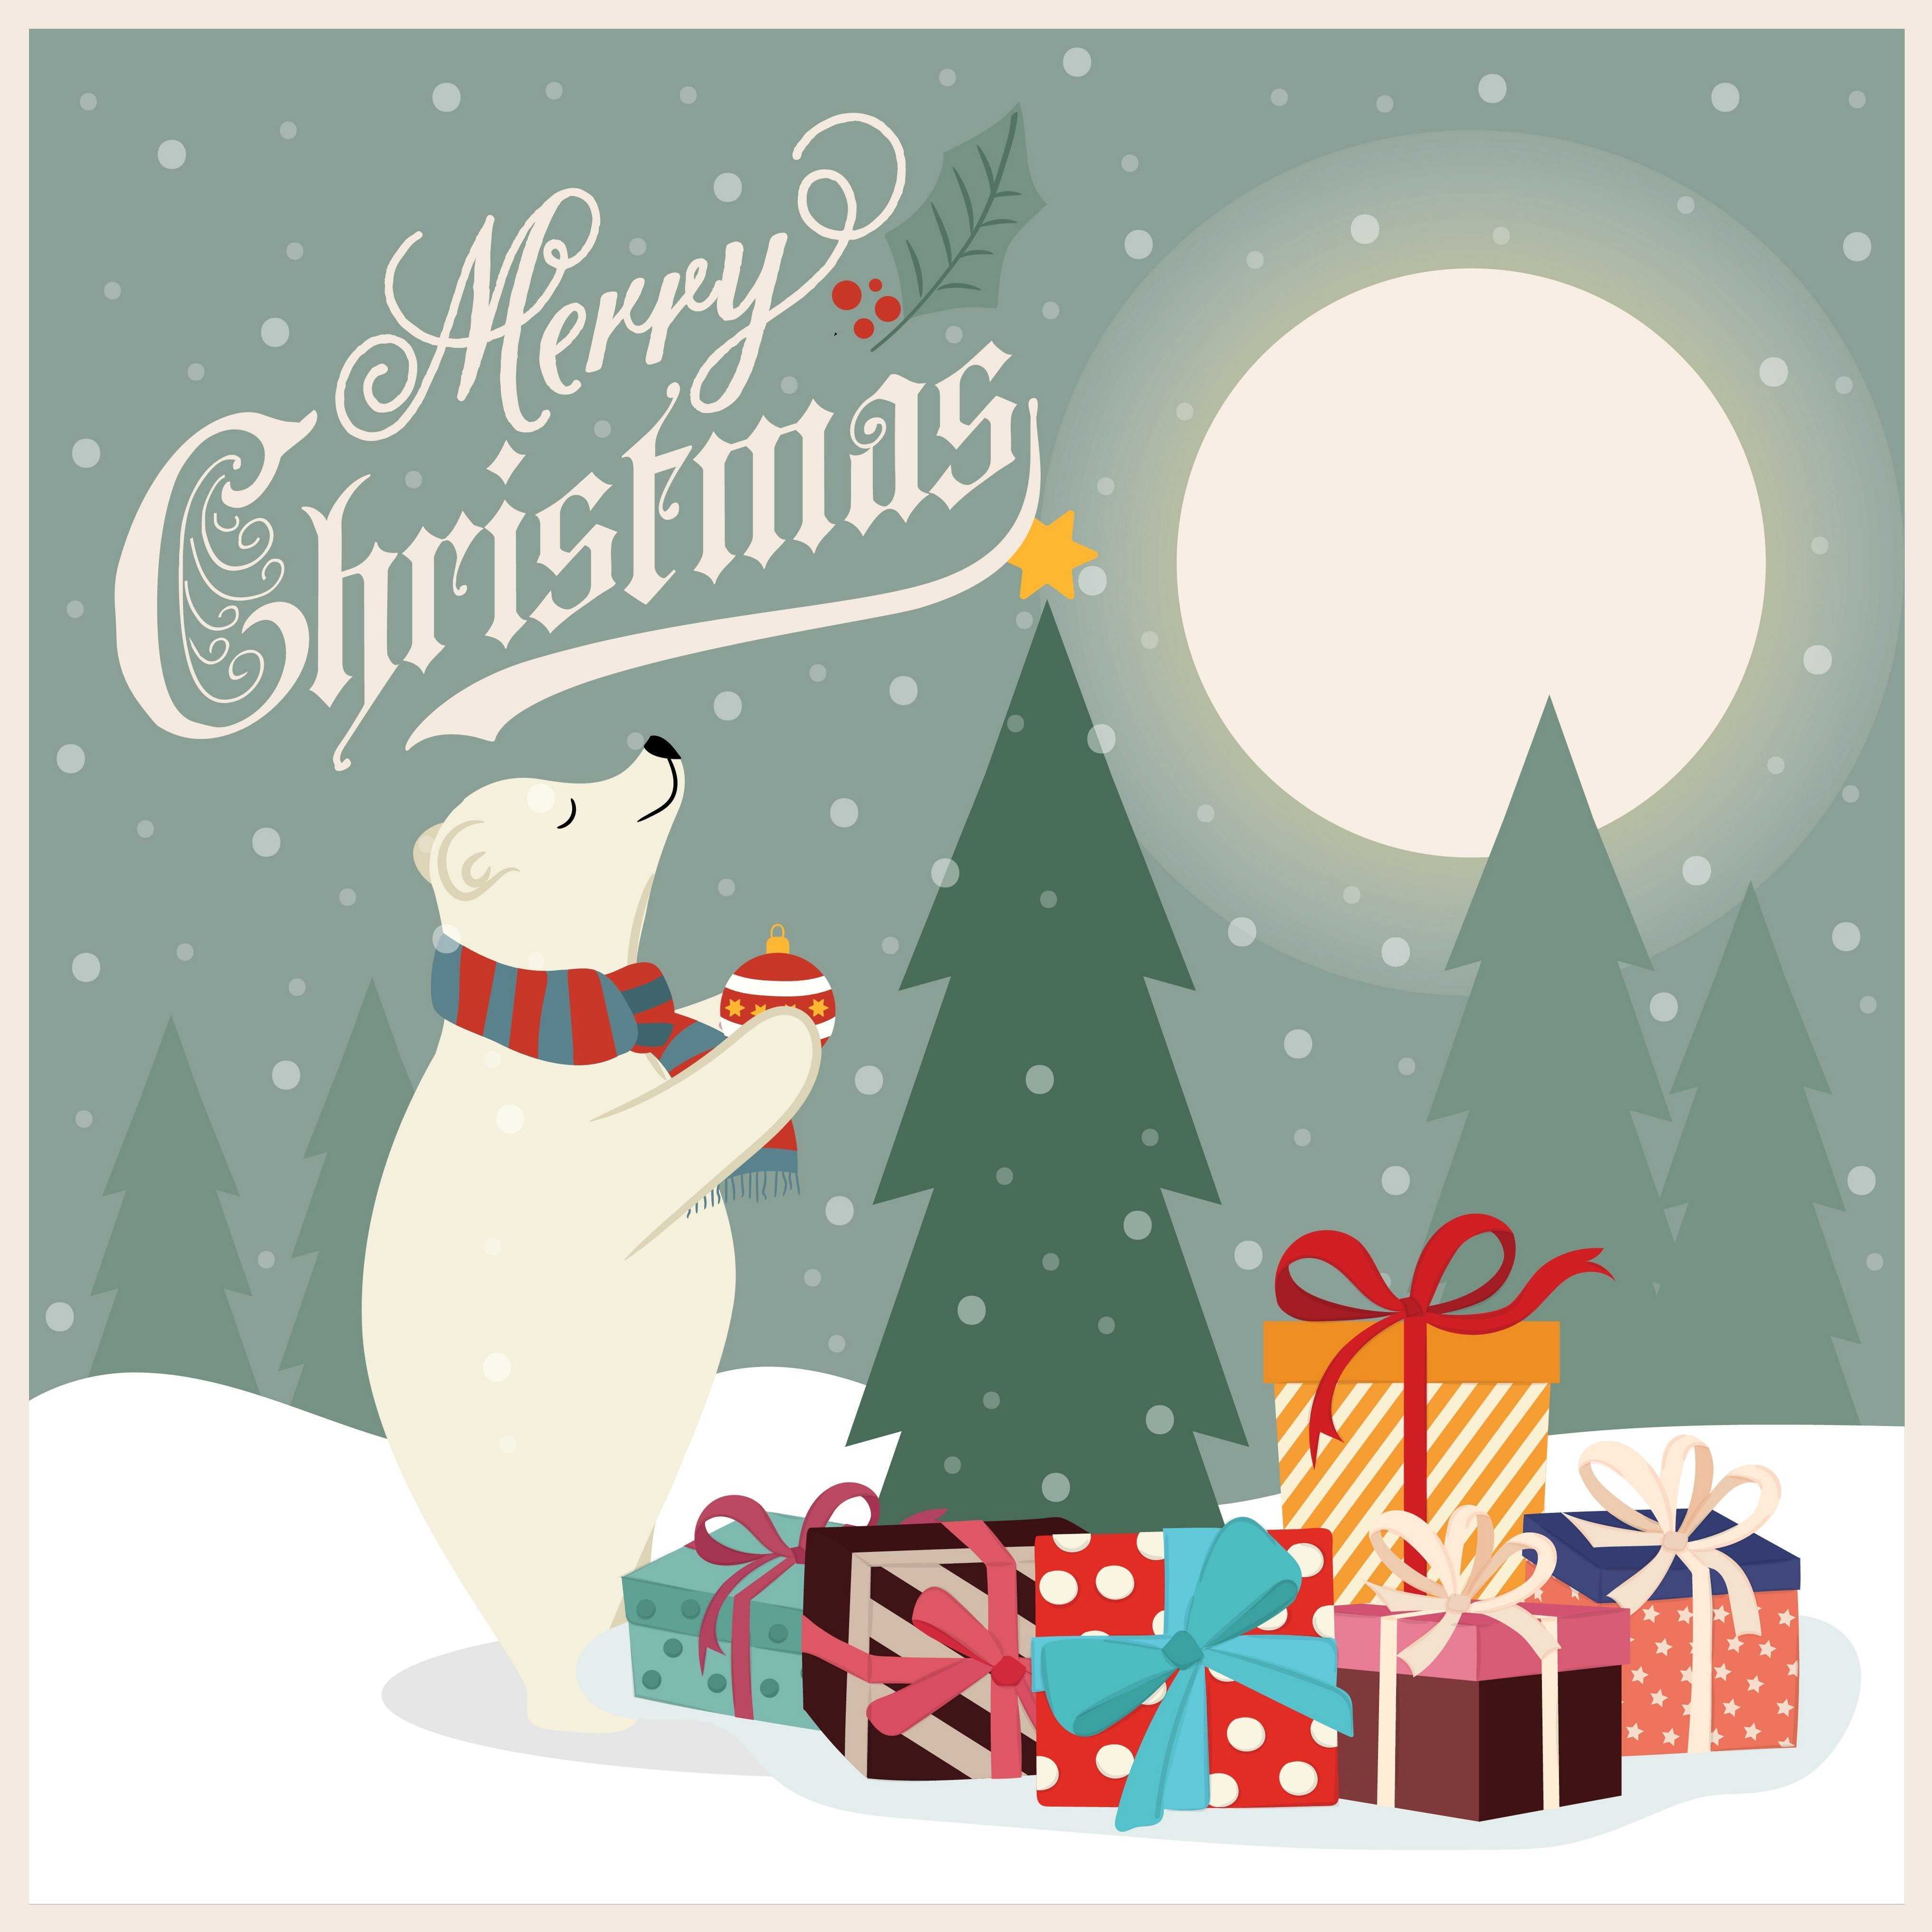 tegning av isbjørn som pynter juletre